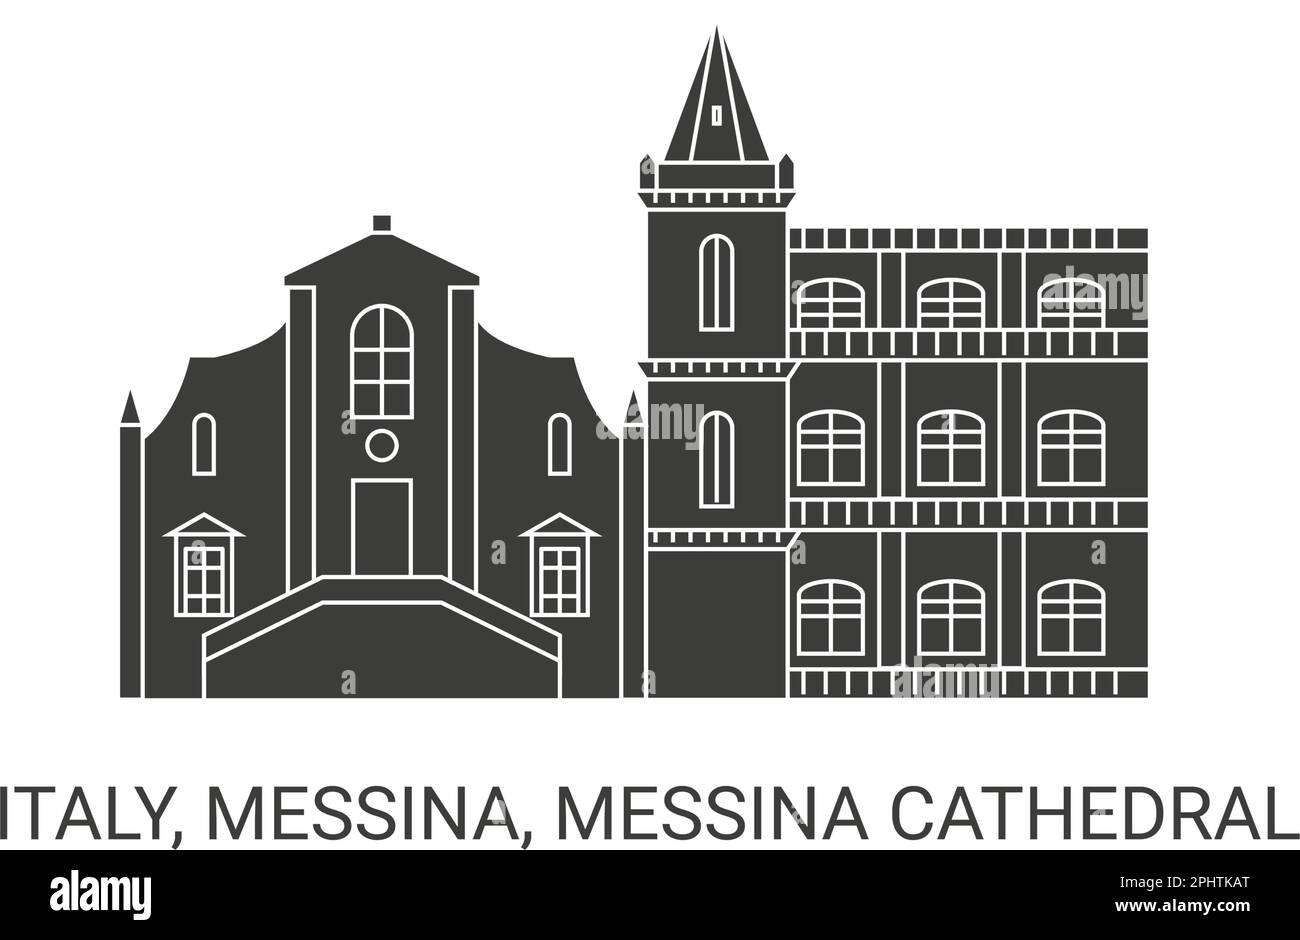 Italy, Messina, Messina Cathedral, travel landmark vector illustration Stock Vector